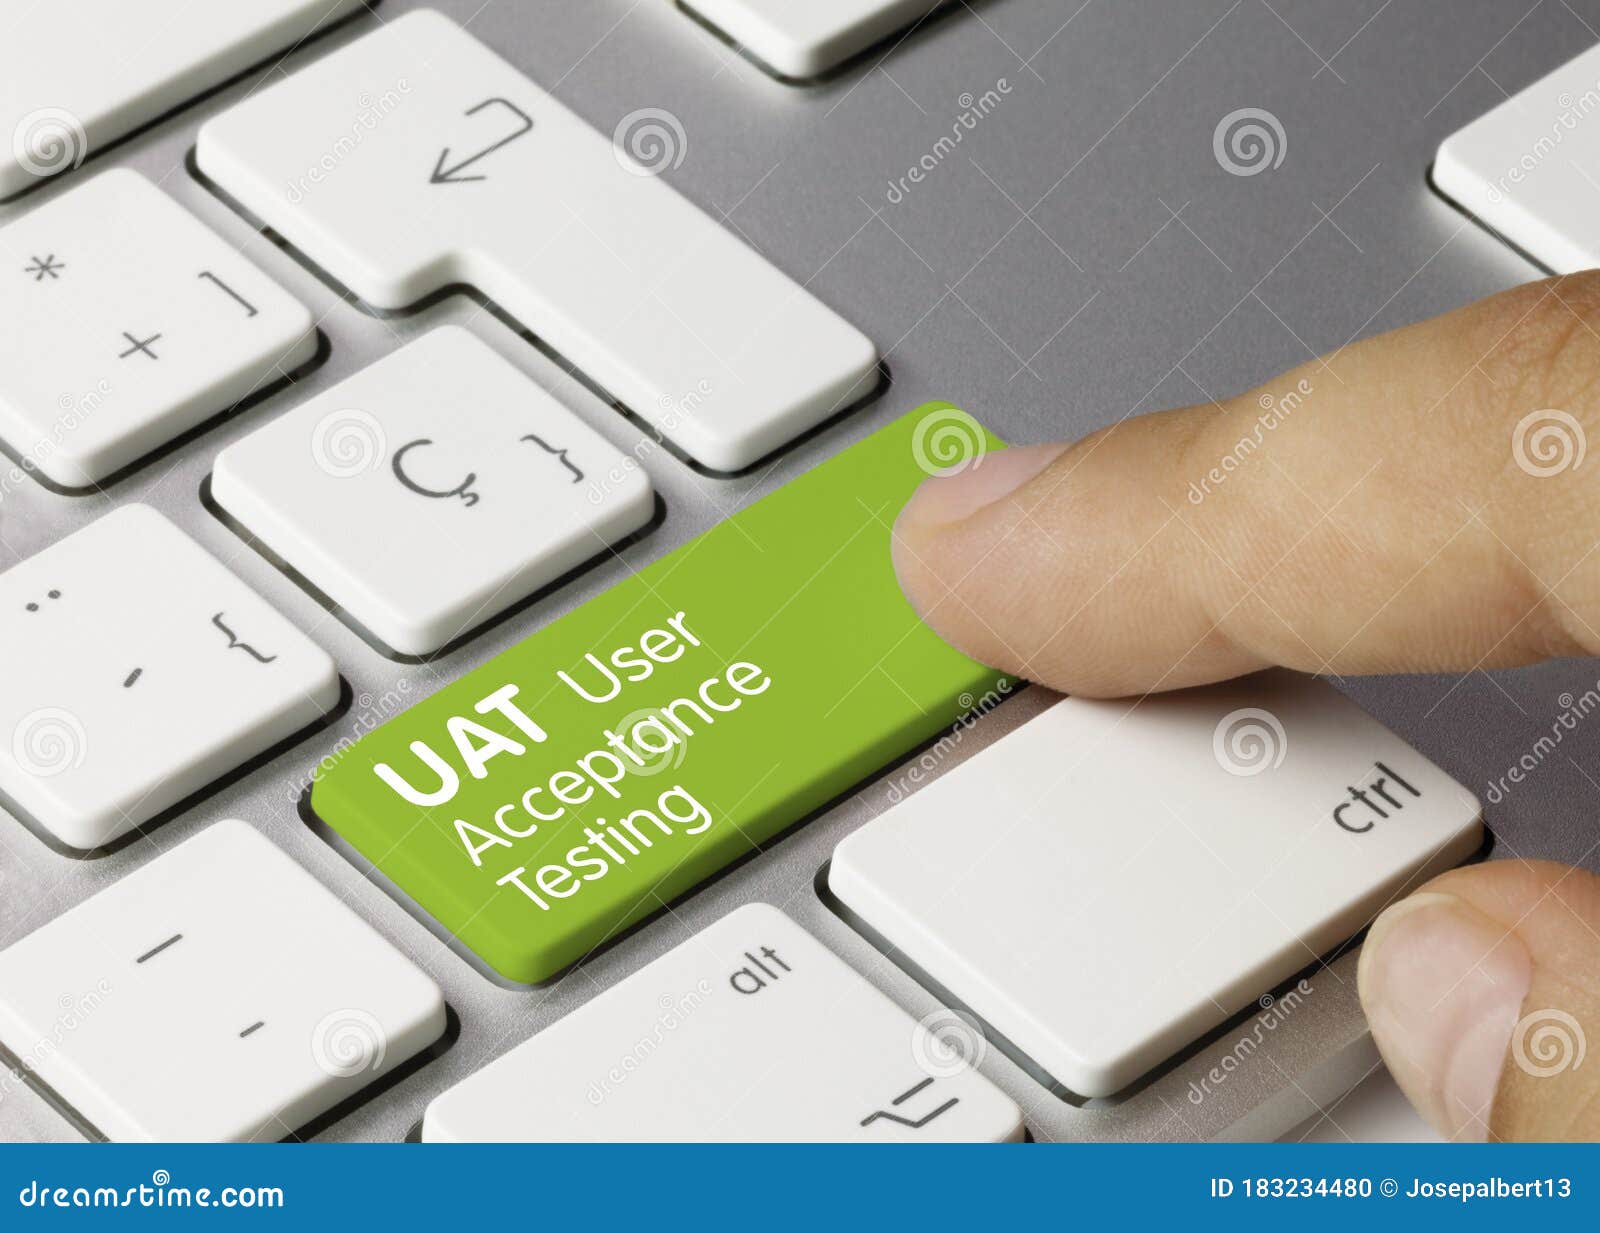 uat user acceptance testing - inscription on green keyboard key